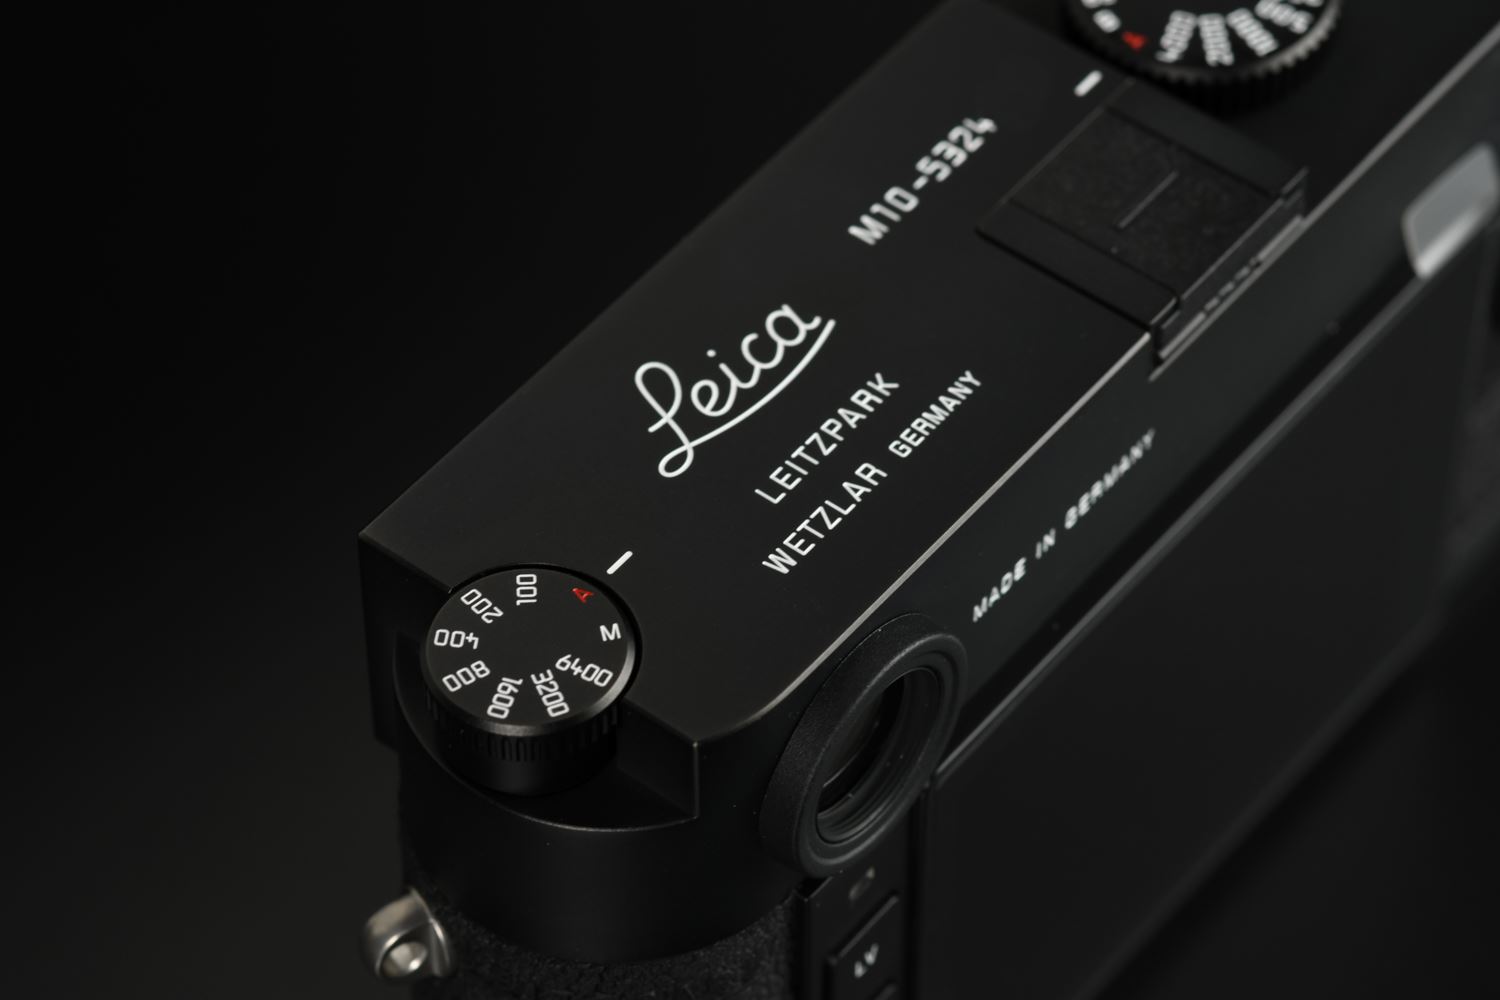 Picture of Leica M10 Leitzpark Edition Black